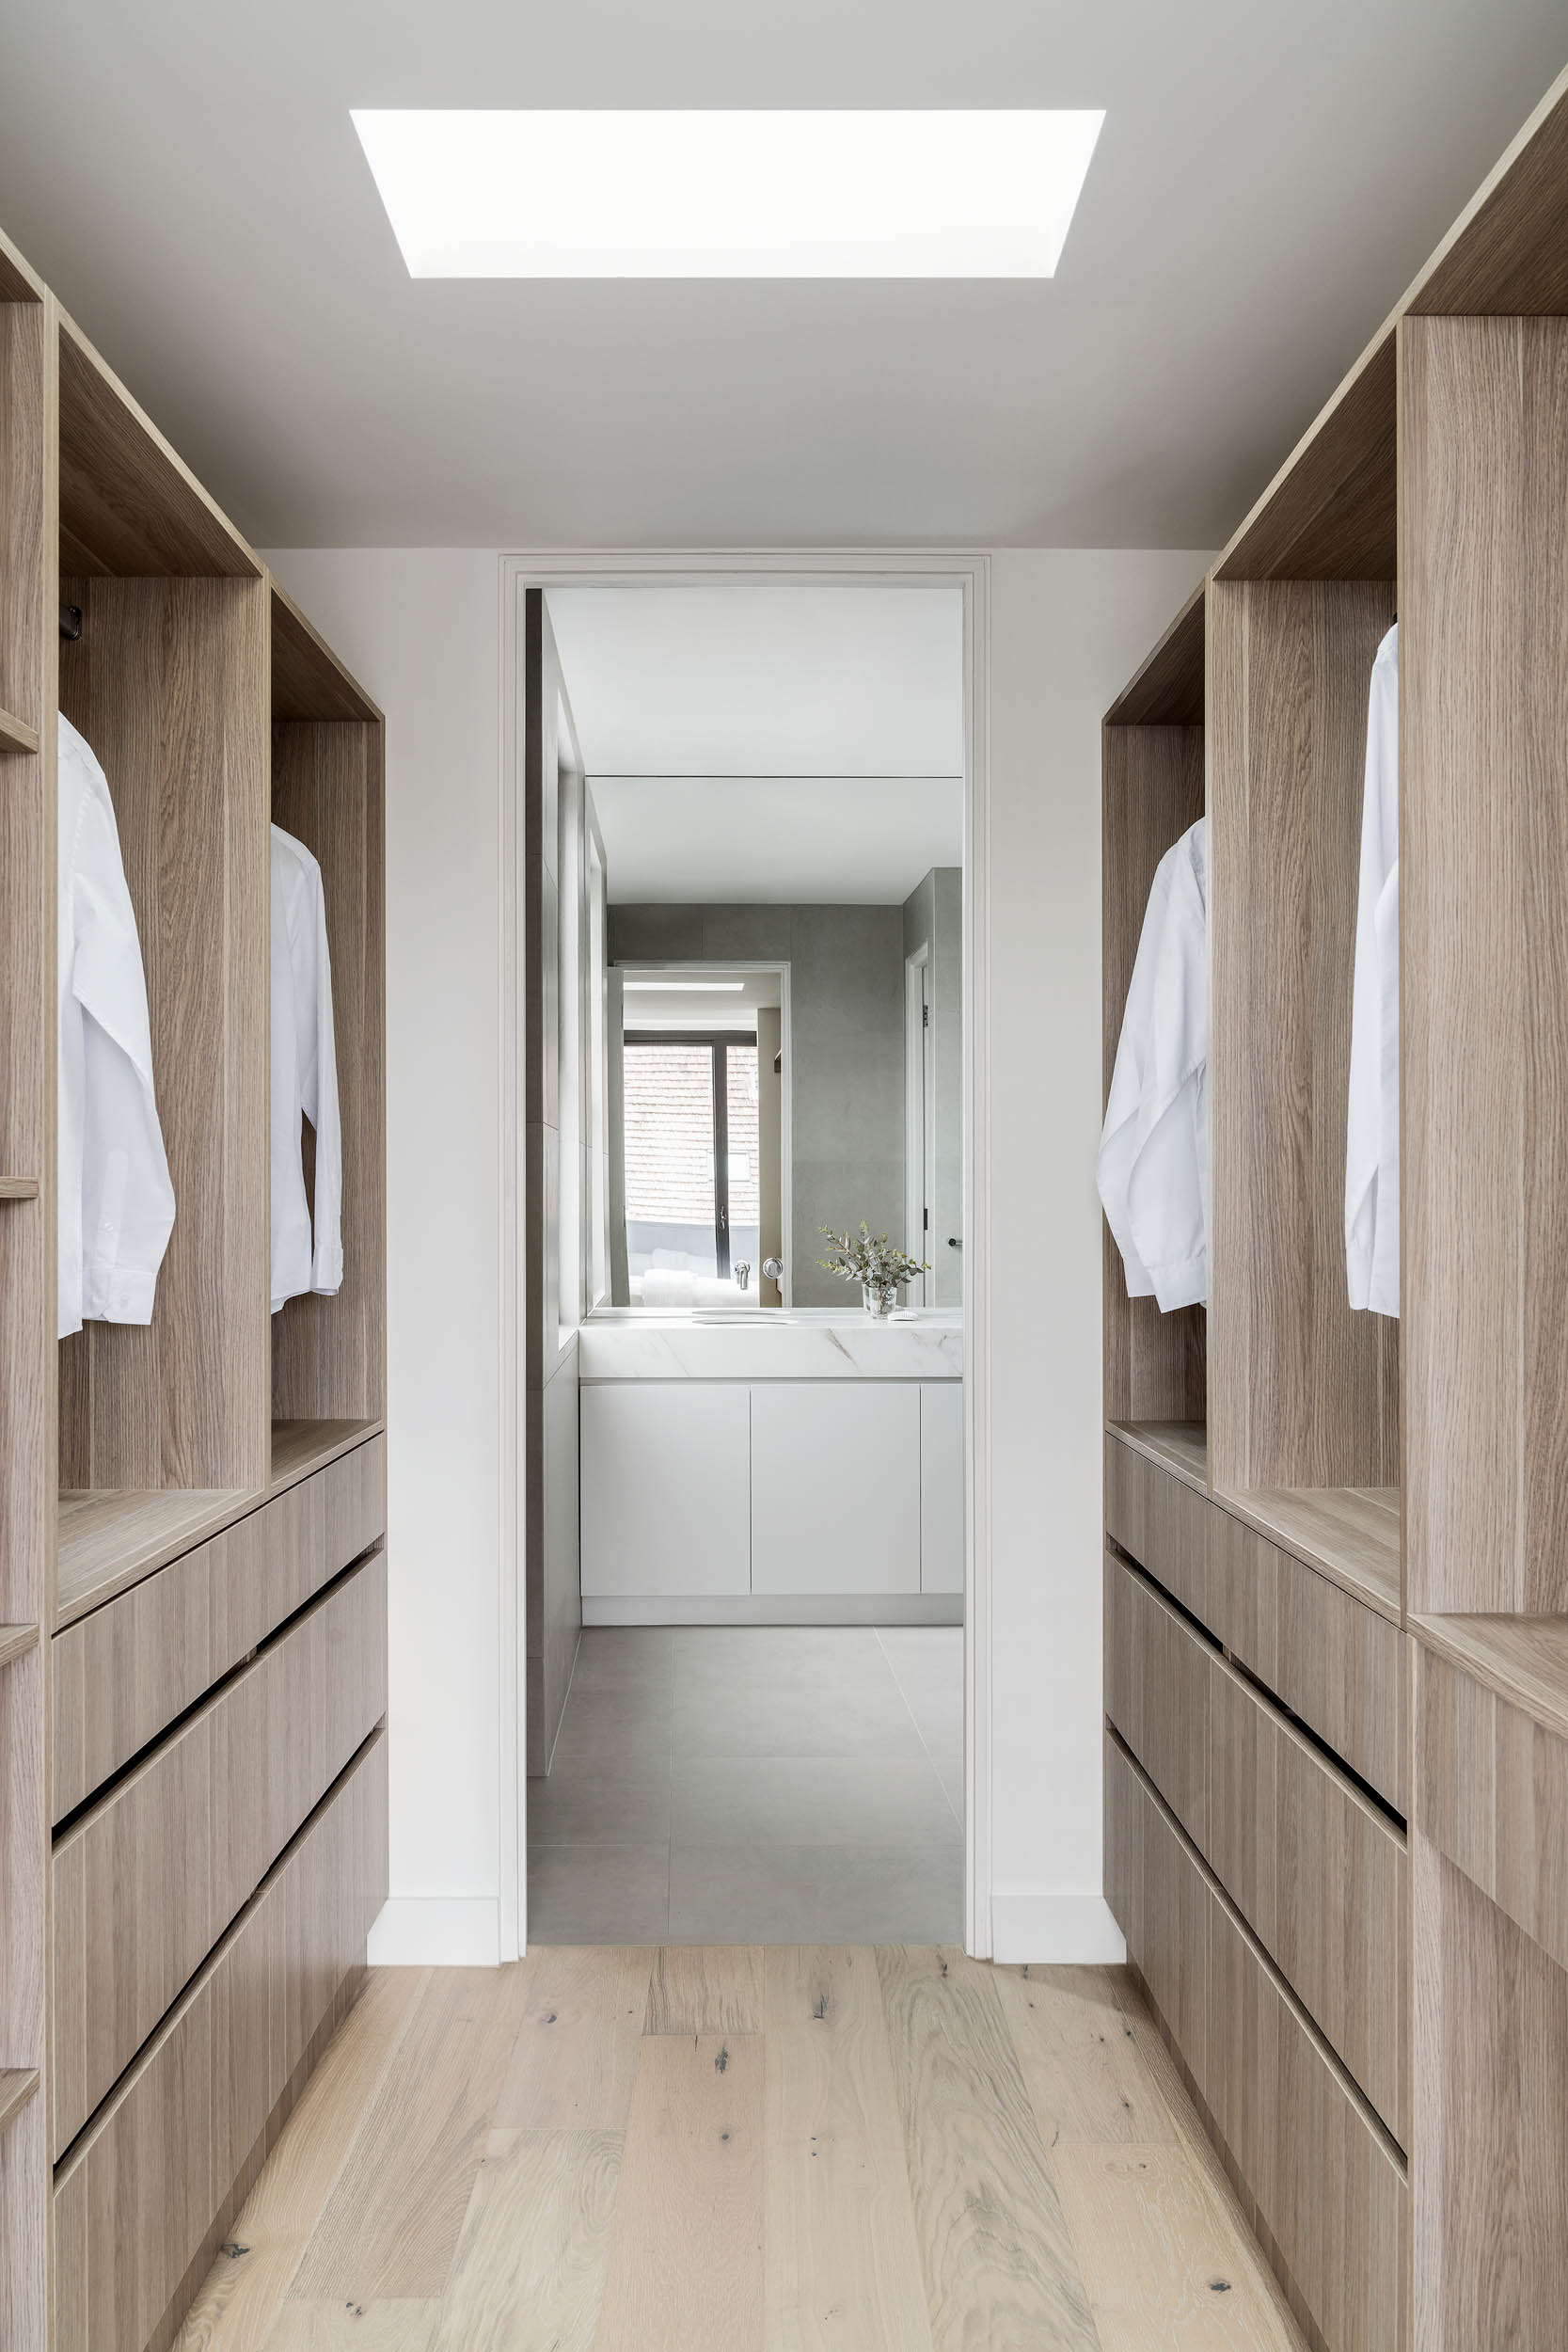 penthouse-walkin-robe-ensuite-interior-kew-multi-residential-development-ckairouz-architects